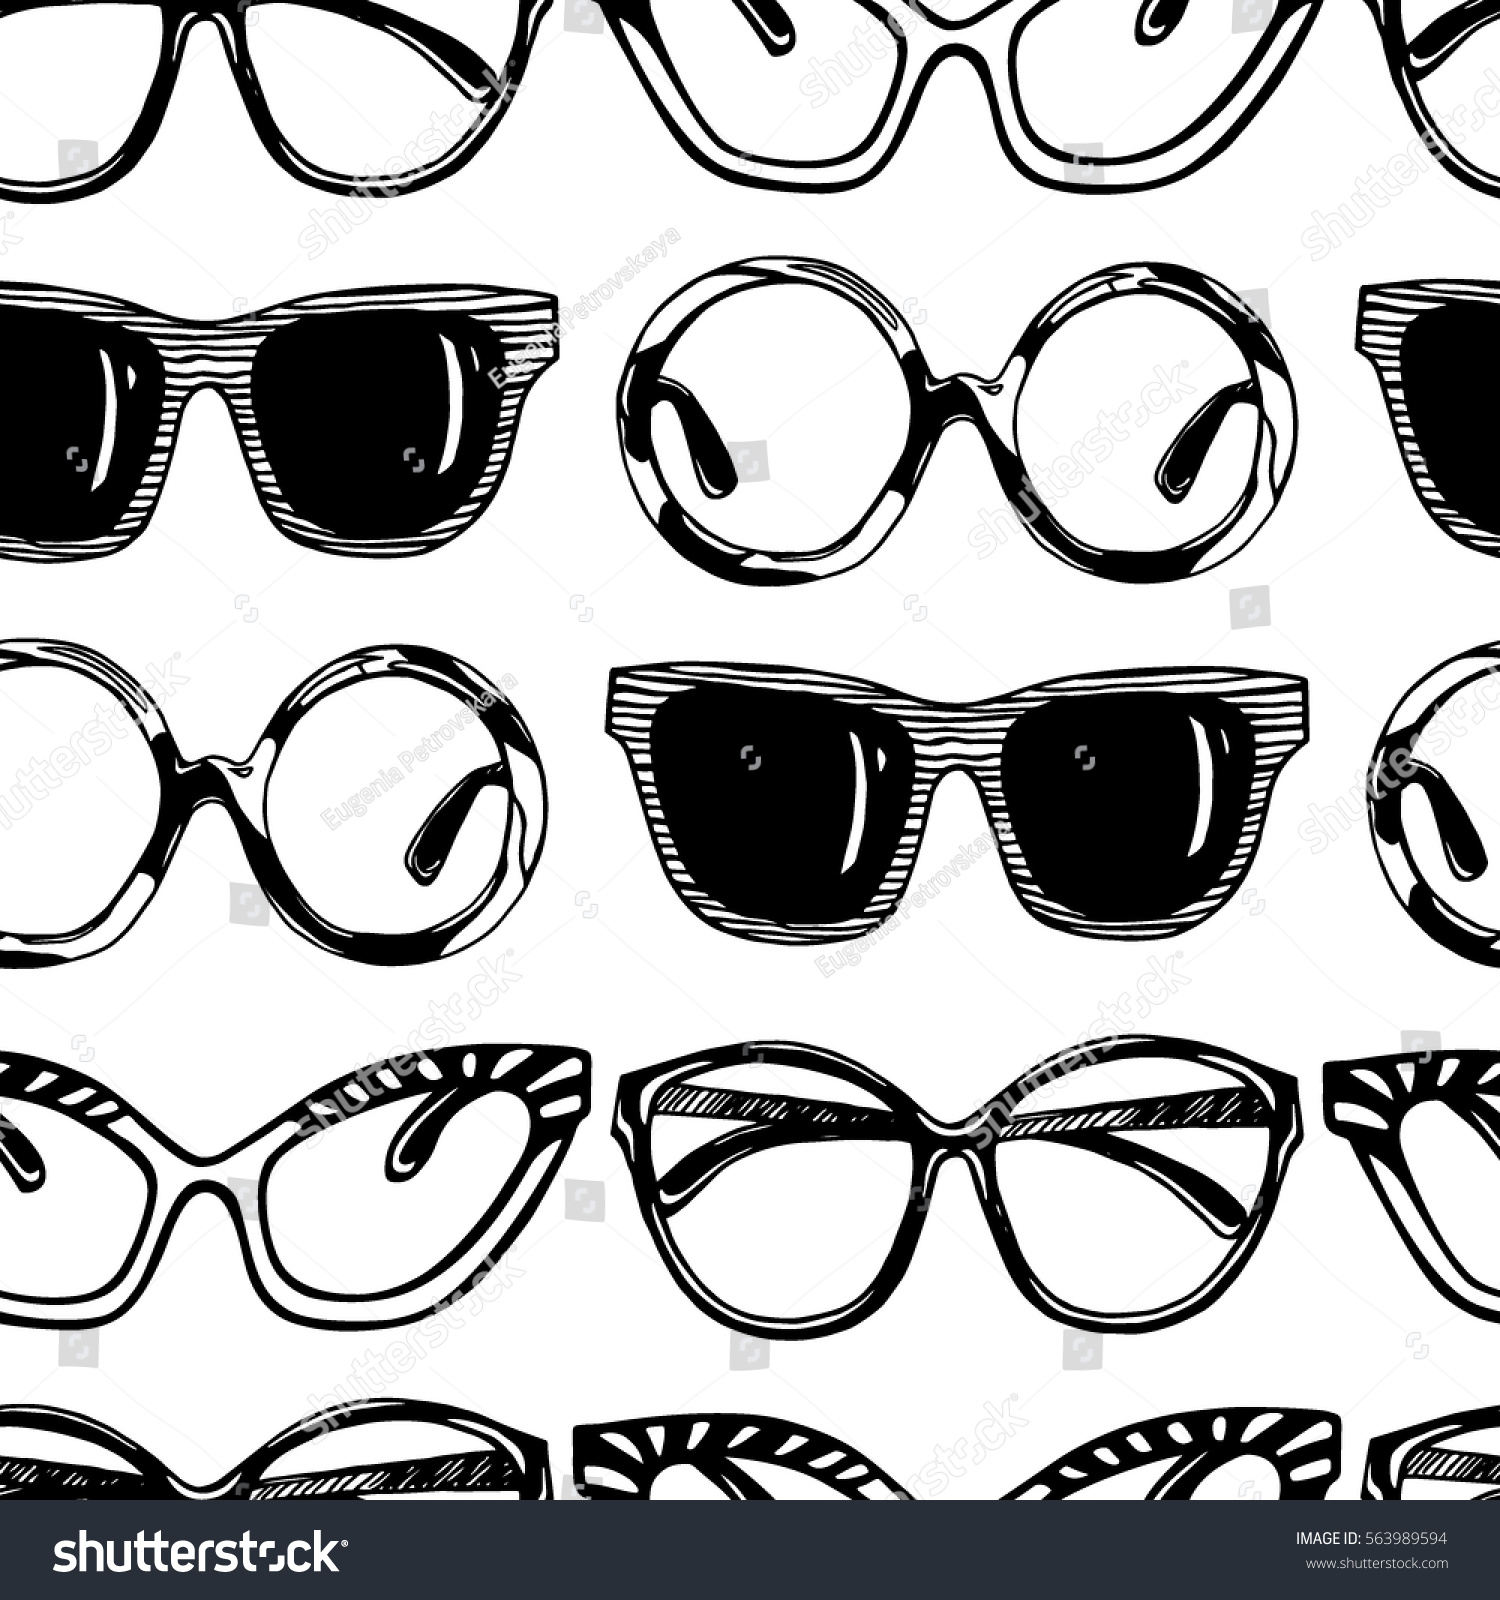 vector-seamless-pattern-hand-drawn-sunglasses-stock-vector-563989594